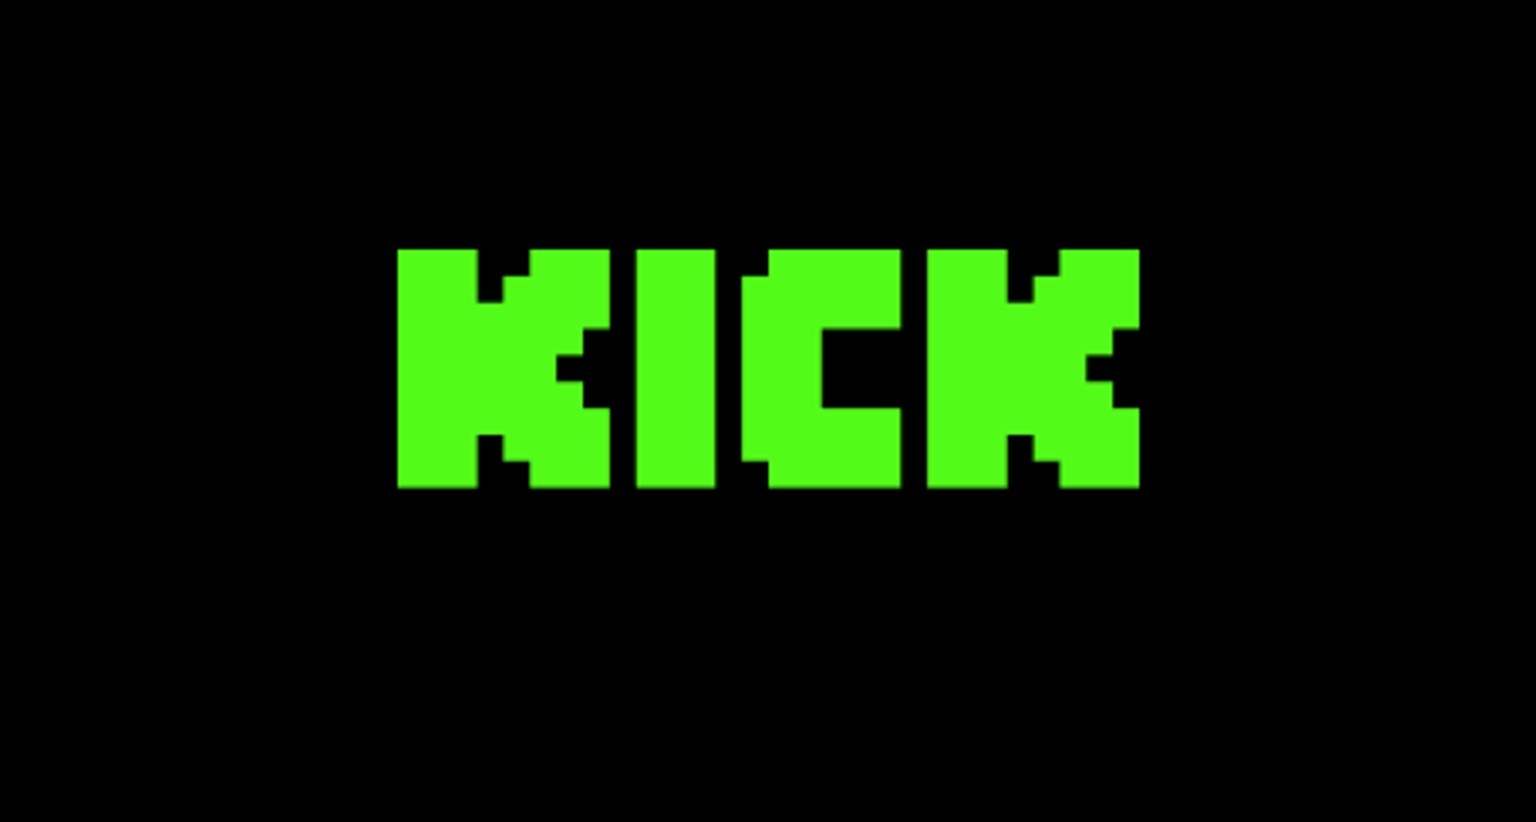 Kick planta cara a Twitch con su atractivo sistema de compensación económica para creadores